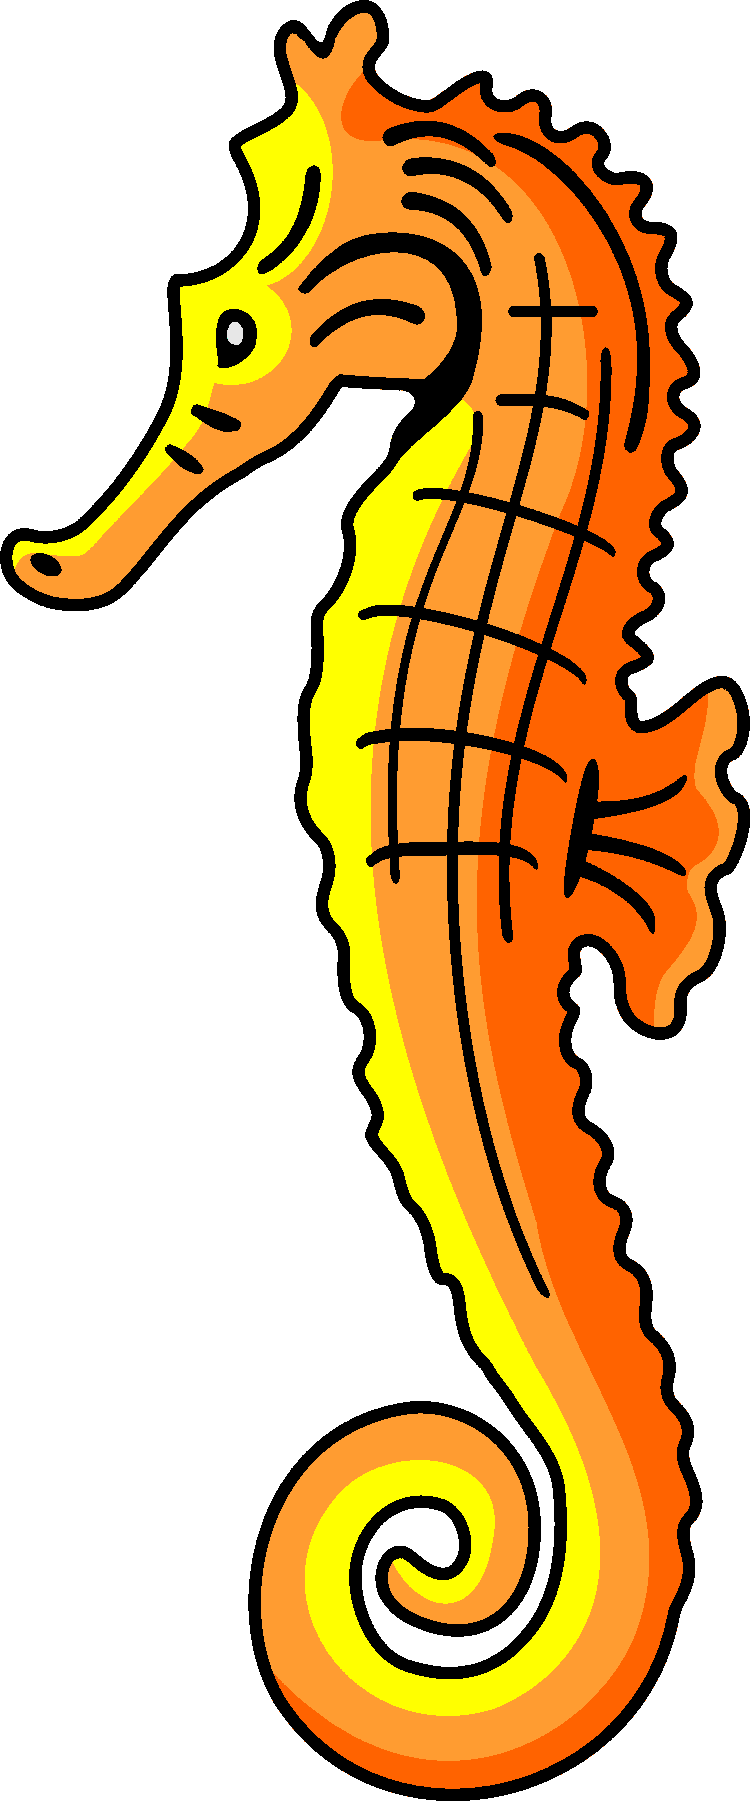 Seahorse on seahorses seahorse drawing and seahorse clip art .